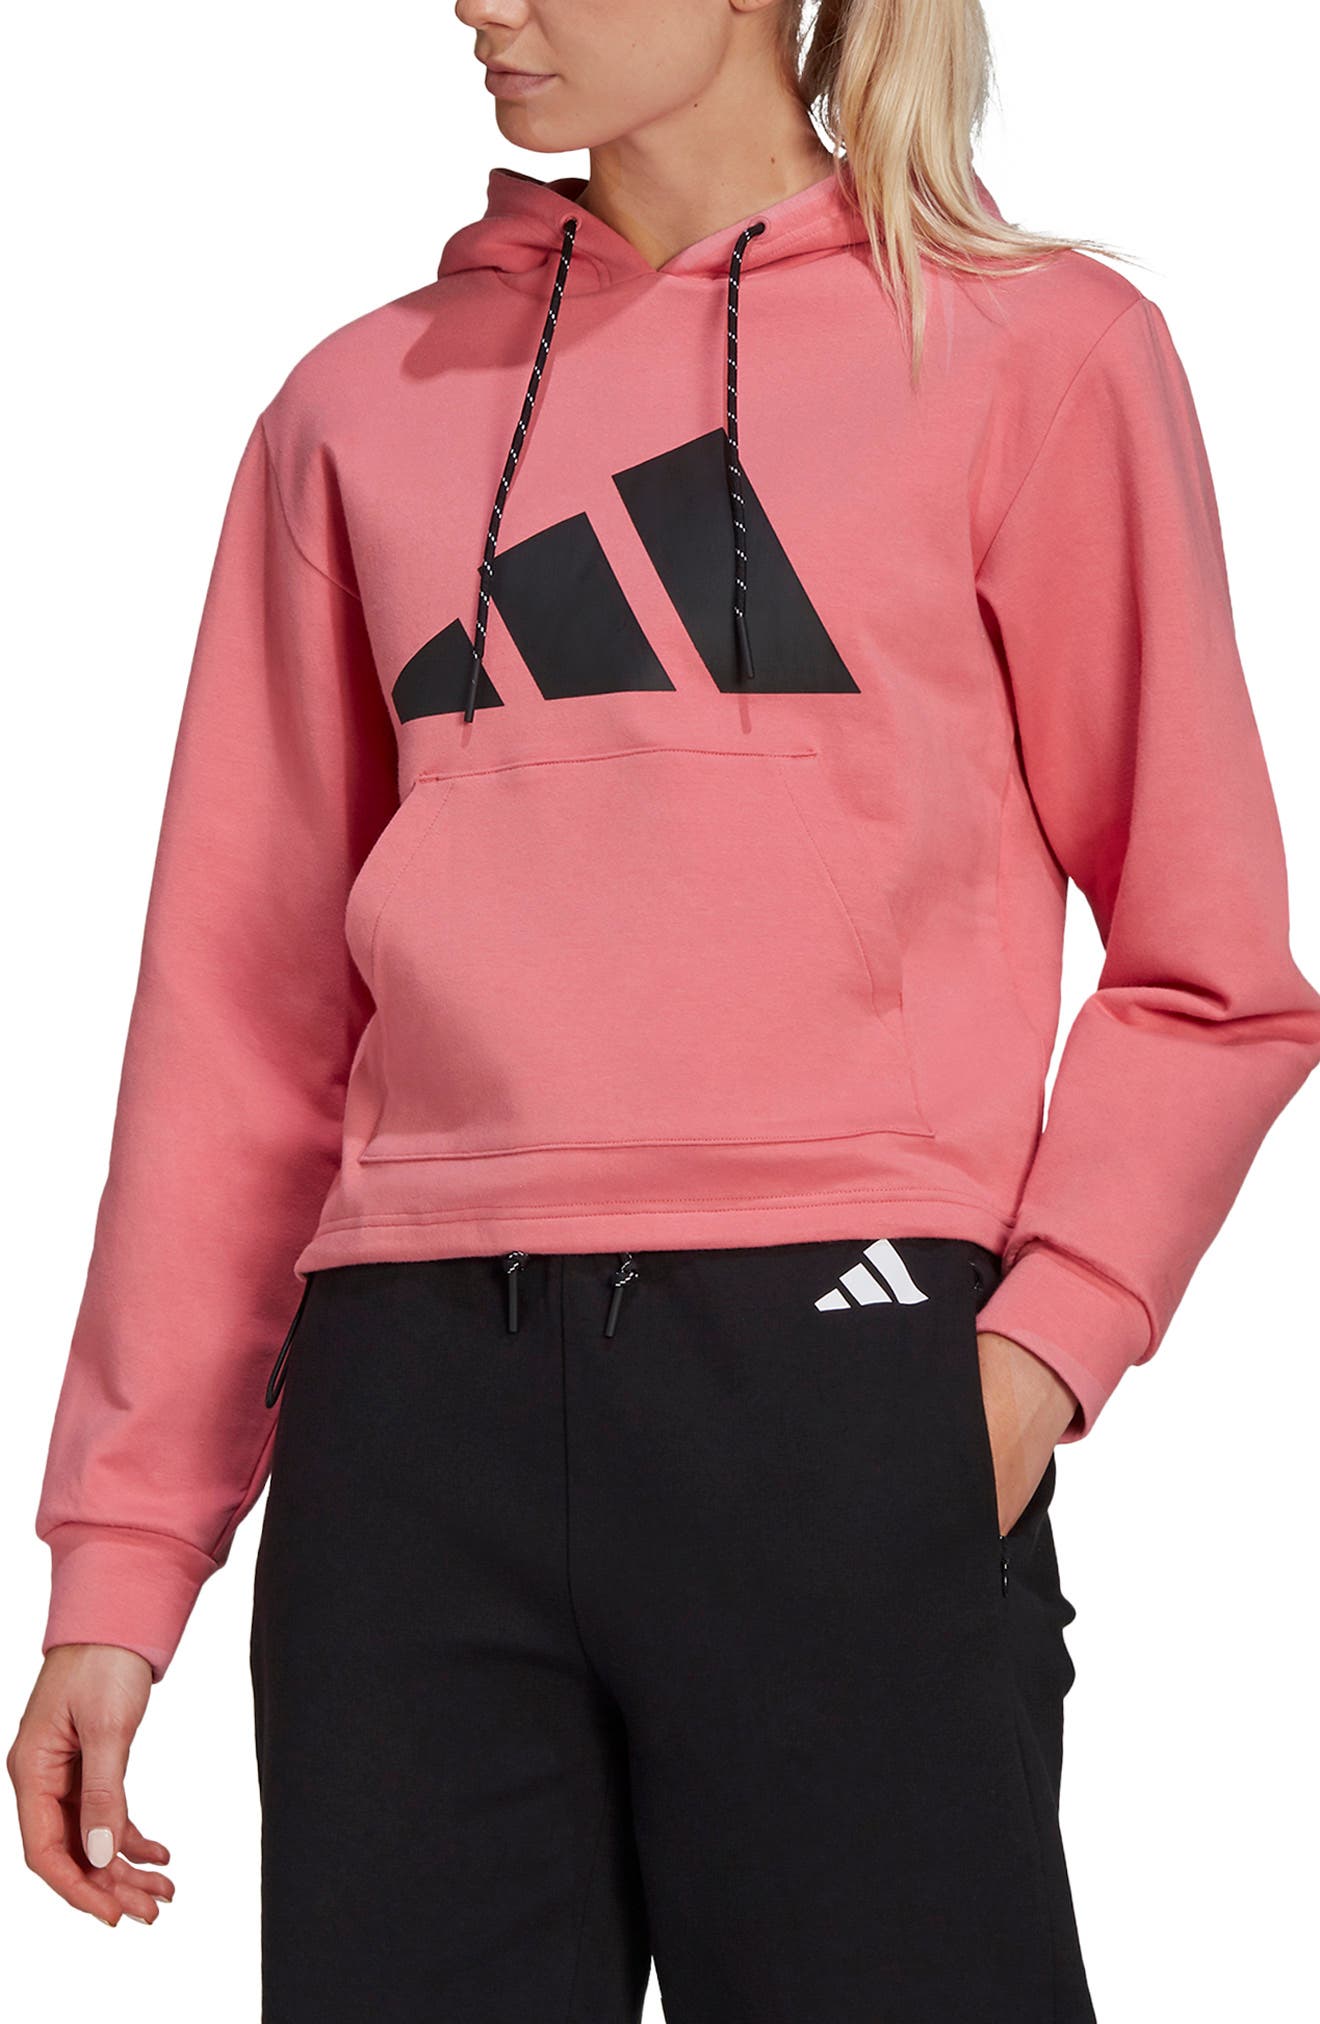 adidas pink and grey sweatshirt